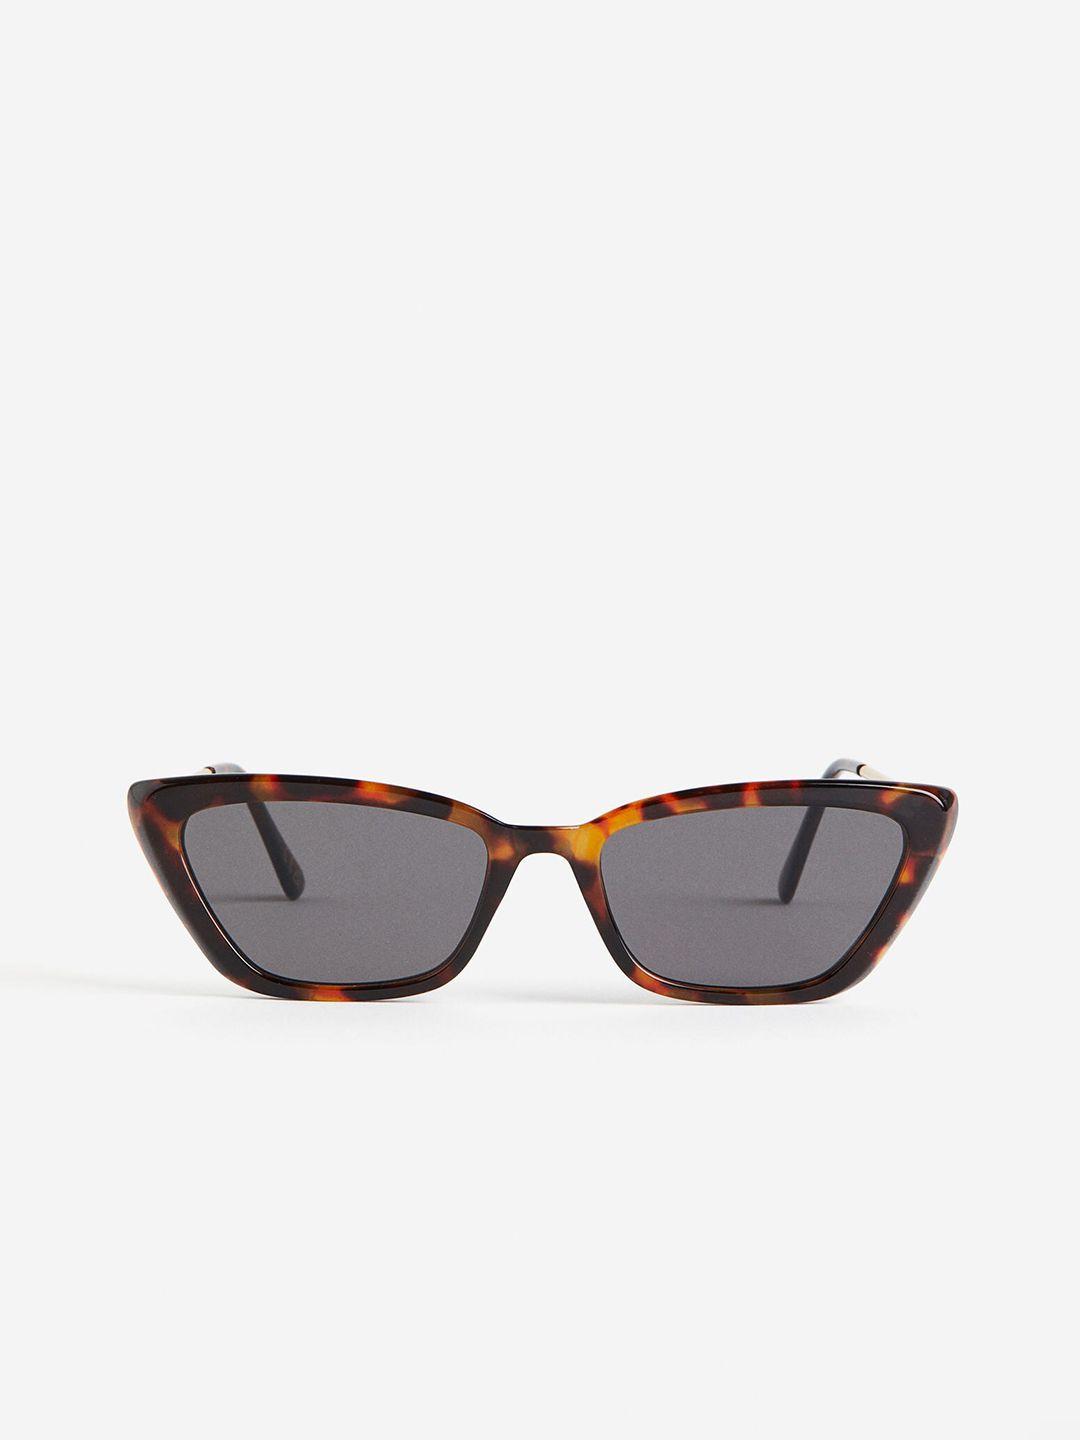 h&m-cat-eye-sunglasses